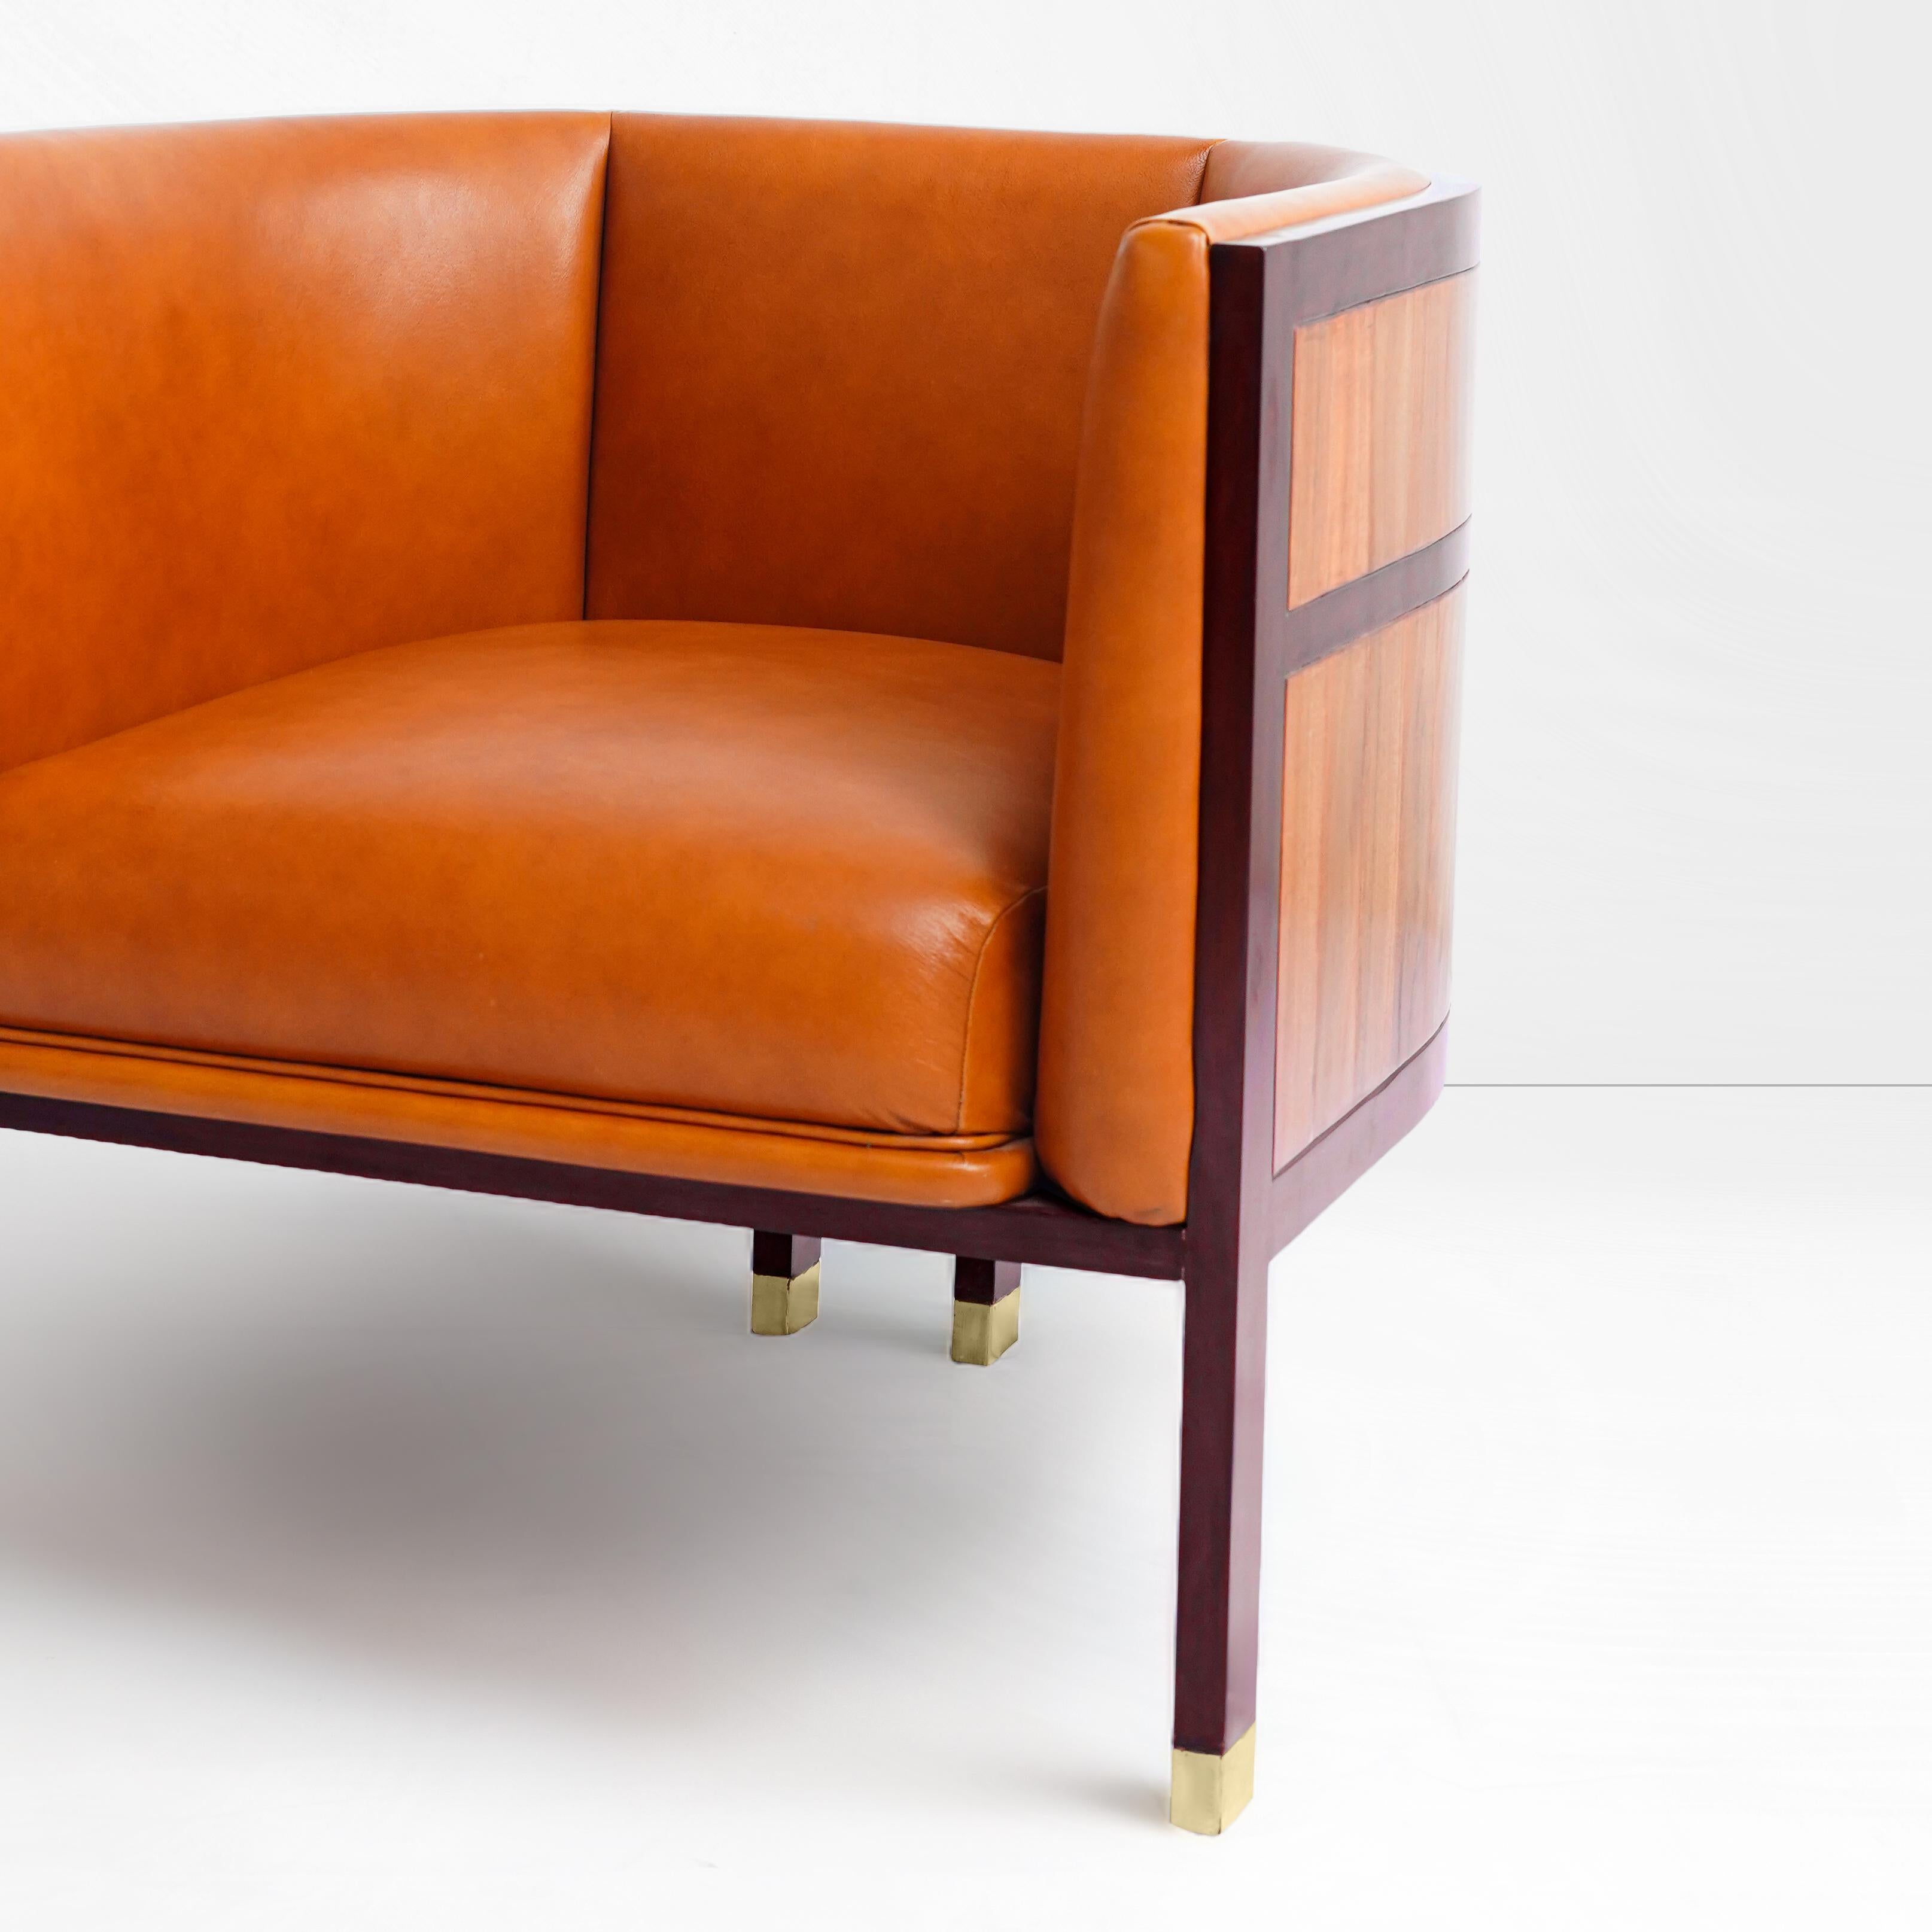 Pakistani Original lounge chair, Barrel chair, round back chair, bold, modern, walnut wood For Sale